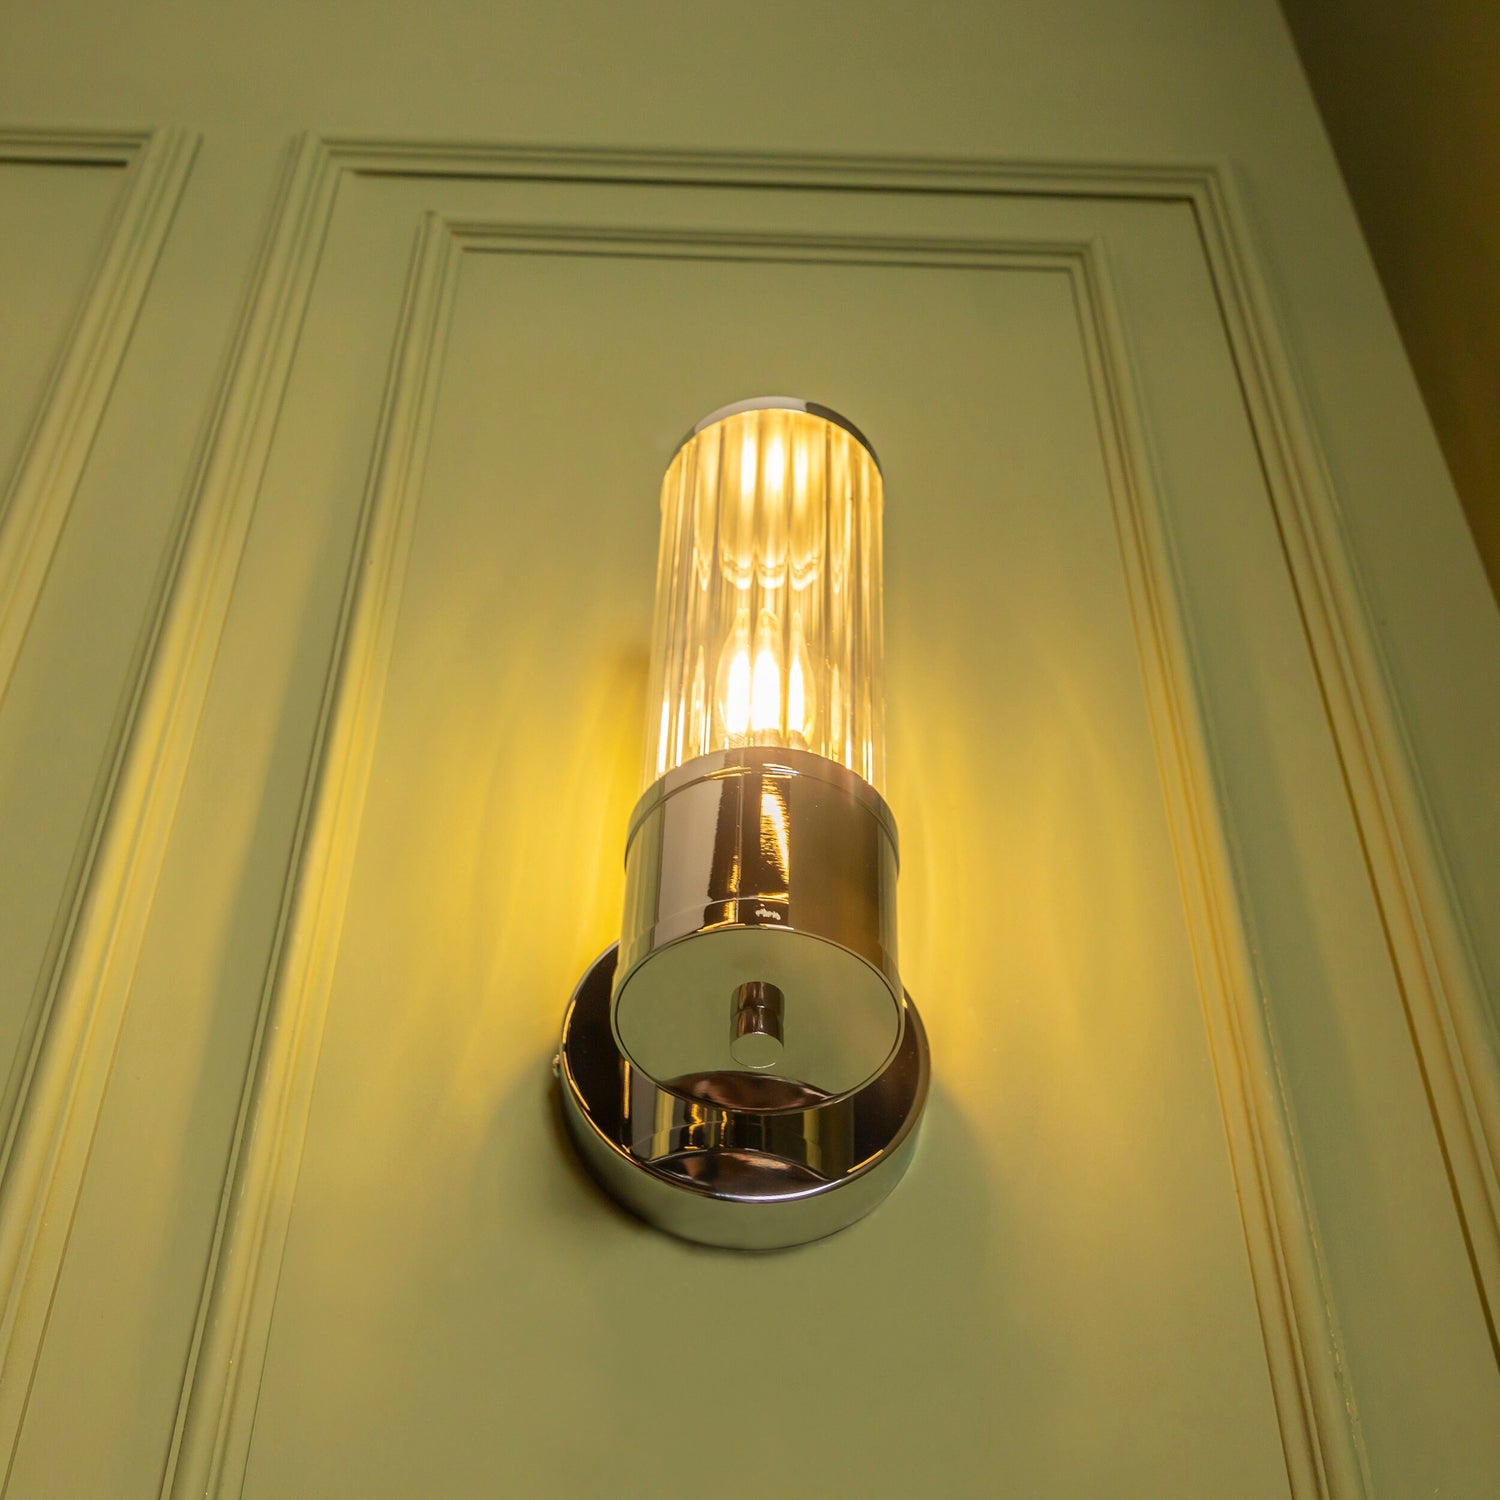 Handmade Wall Mounted Lamp, Glass Tube Wall Lighting, Modern Design Bedside Light Shade, Housewarming Gift Hanging Sconce MODEL : MARSILYA